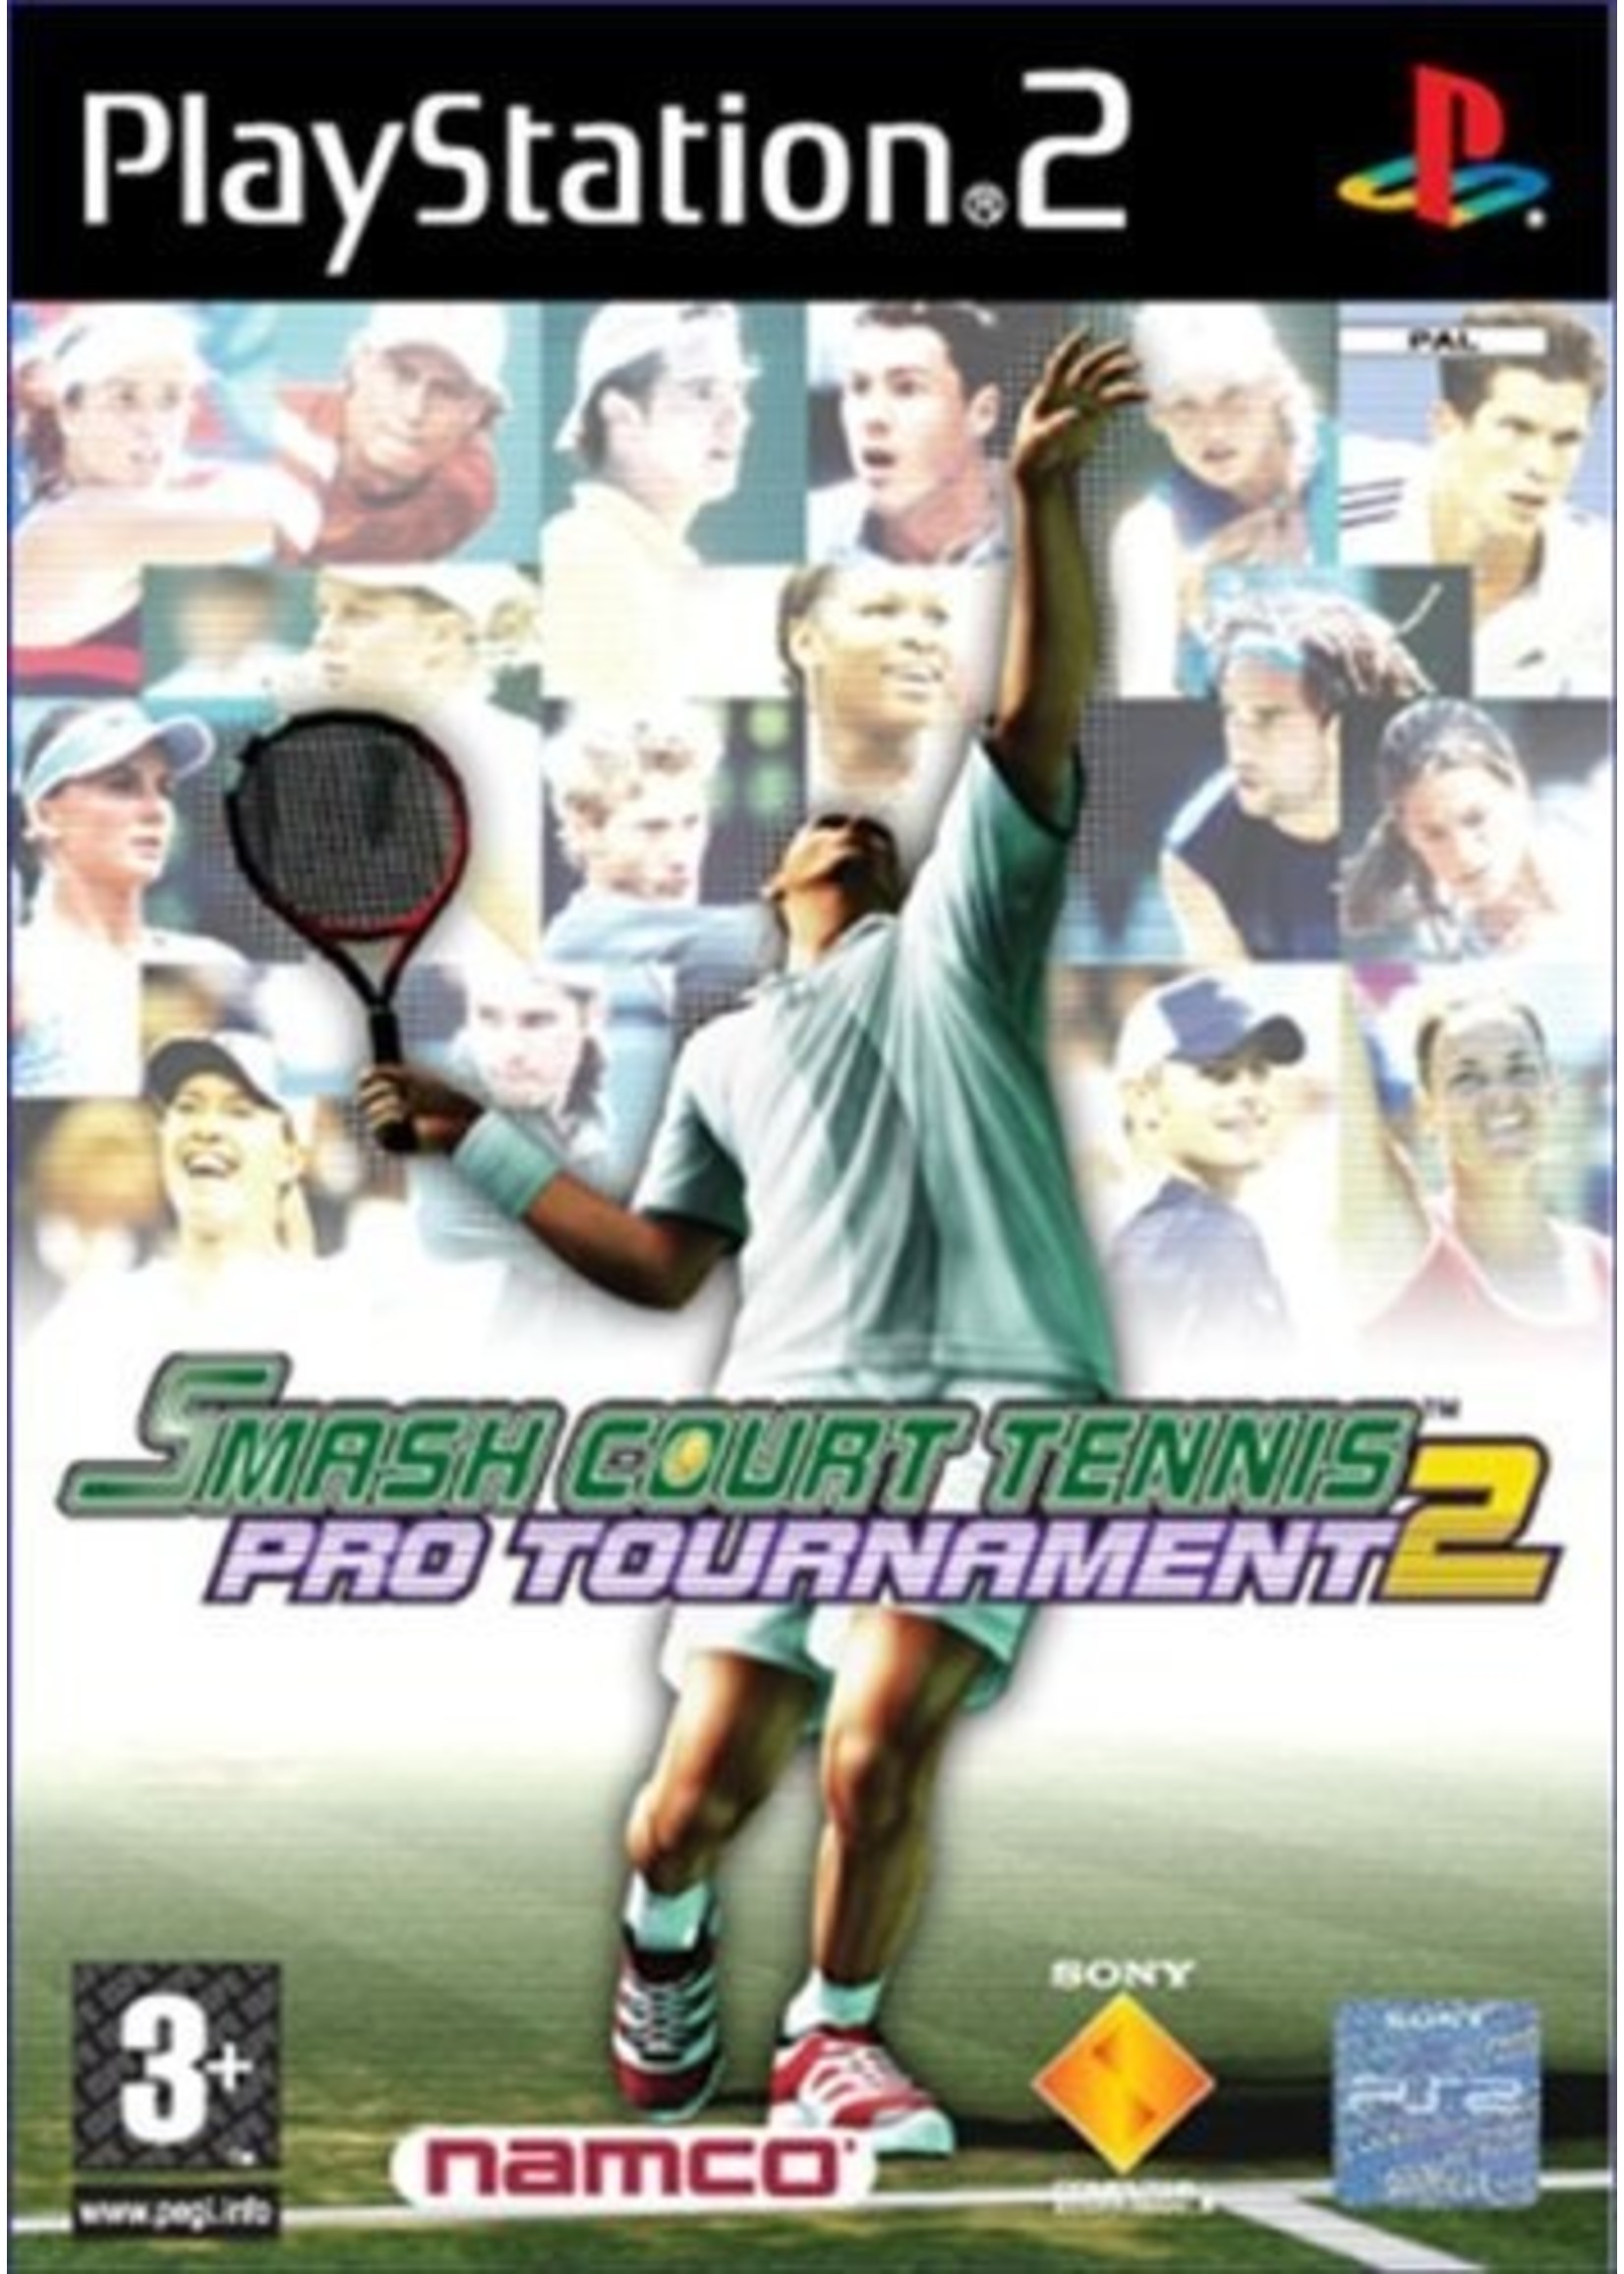 Sony Playstation 2 (PS2) Smash Court Tennis Pro Tournament 2